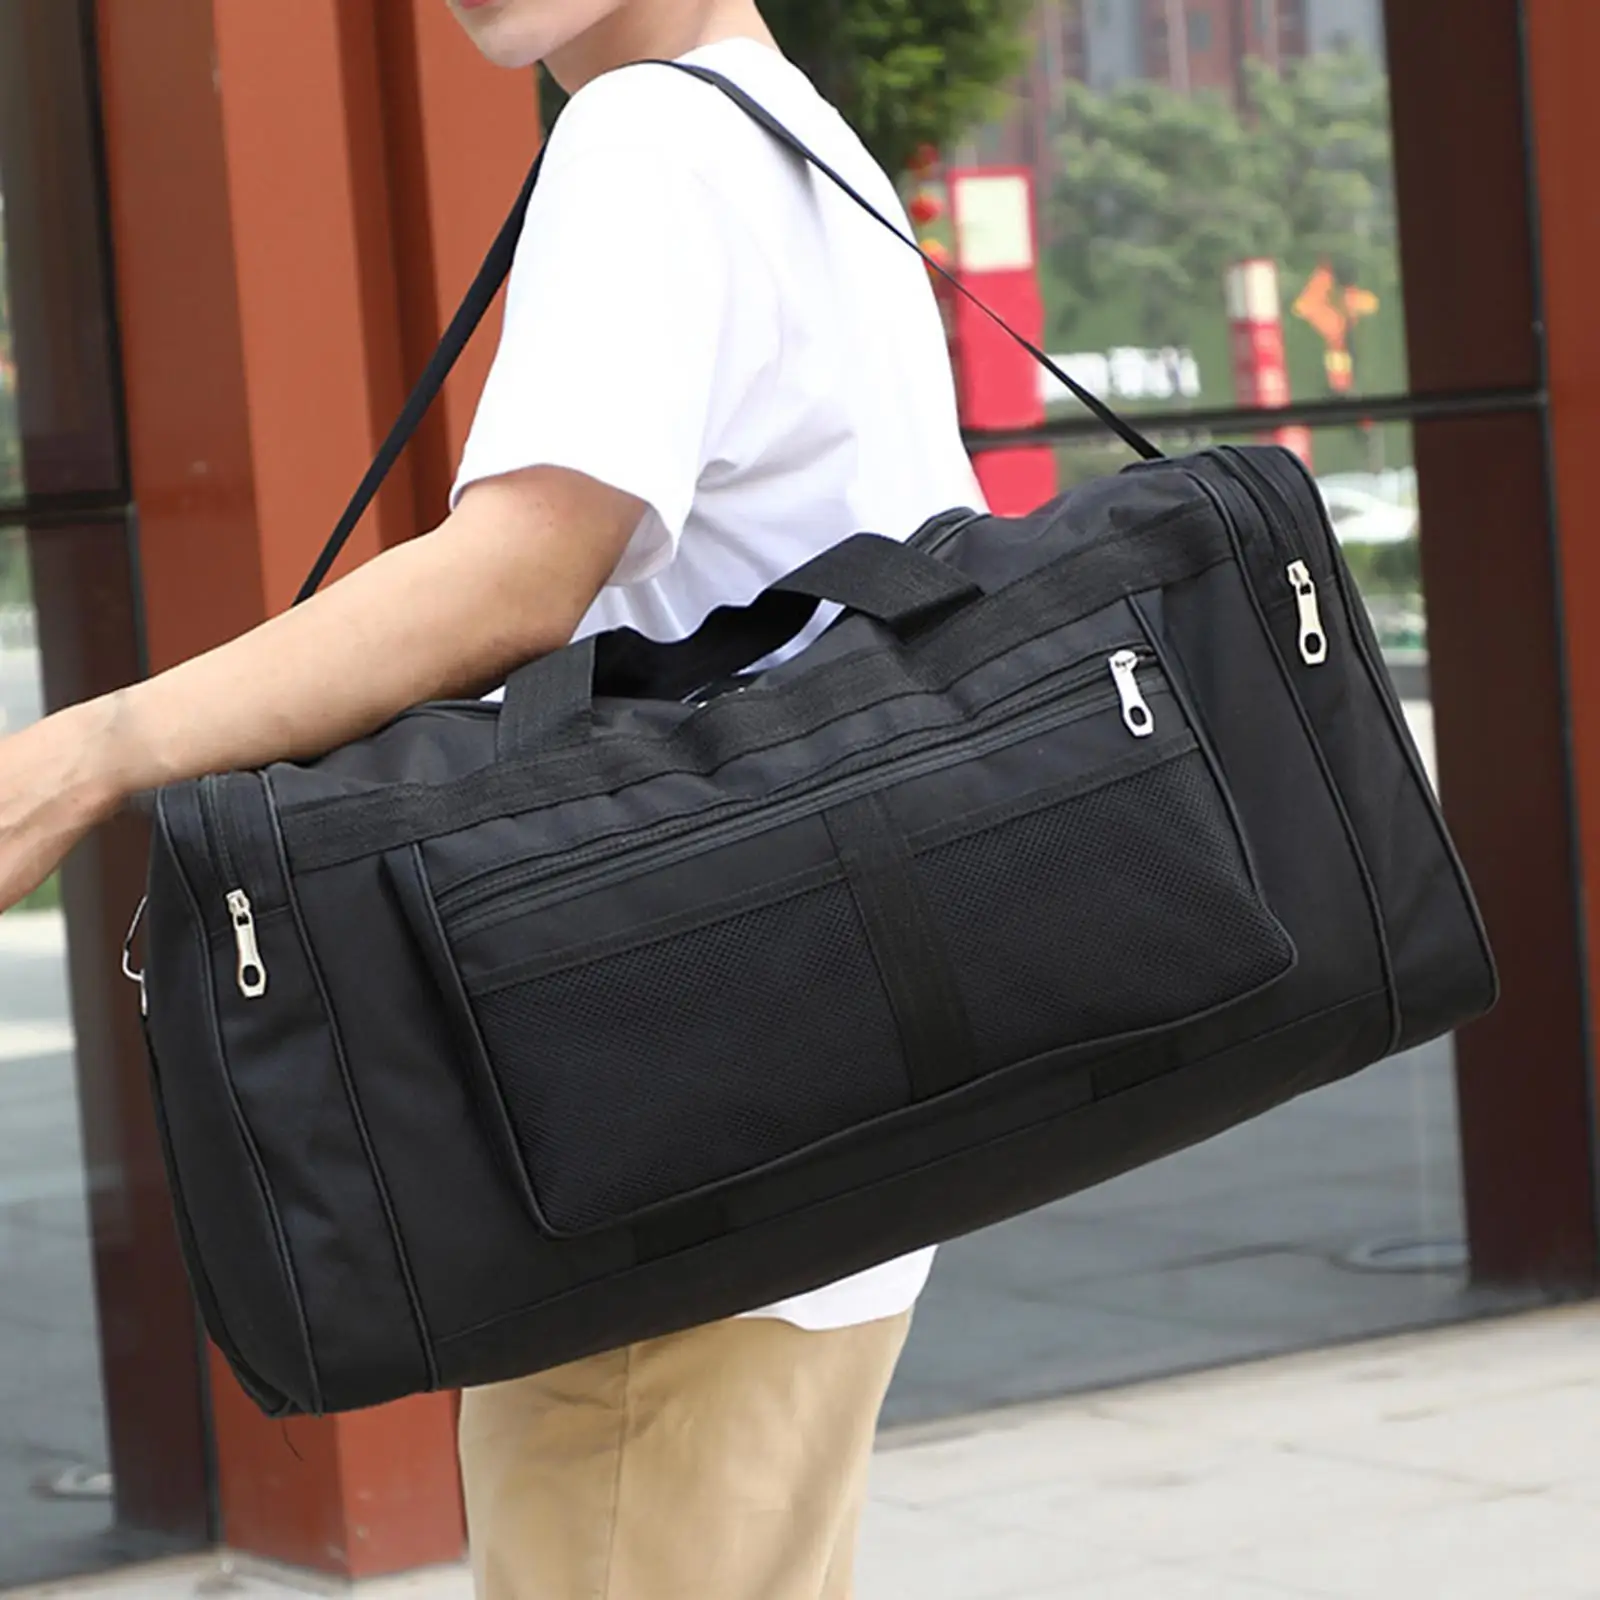 Travel Duffel Bag Handbag Holdall Organizer Storage Carry On Luggage Weekender Bag for Yoga Women Swimming Men Clothing Fitness